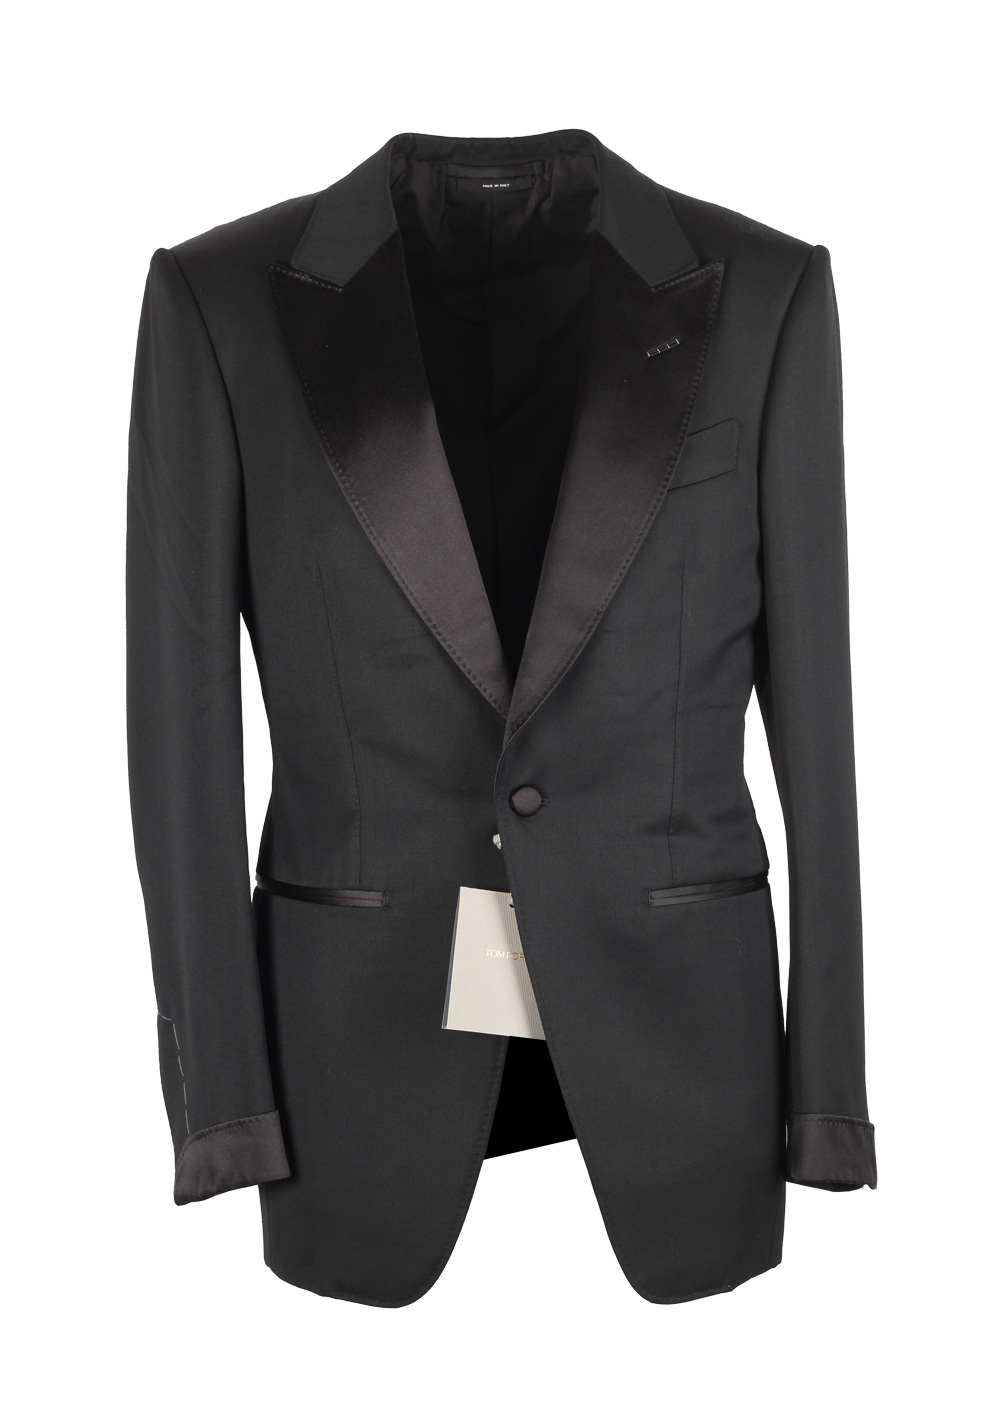 TOM FORD Atticus Black Tuxedo Smoking Suit Size 44C / 34S U.S. | Costume Limité